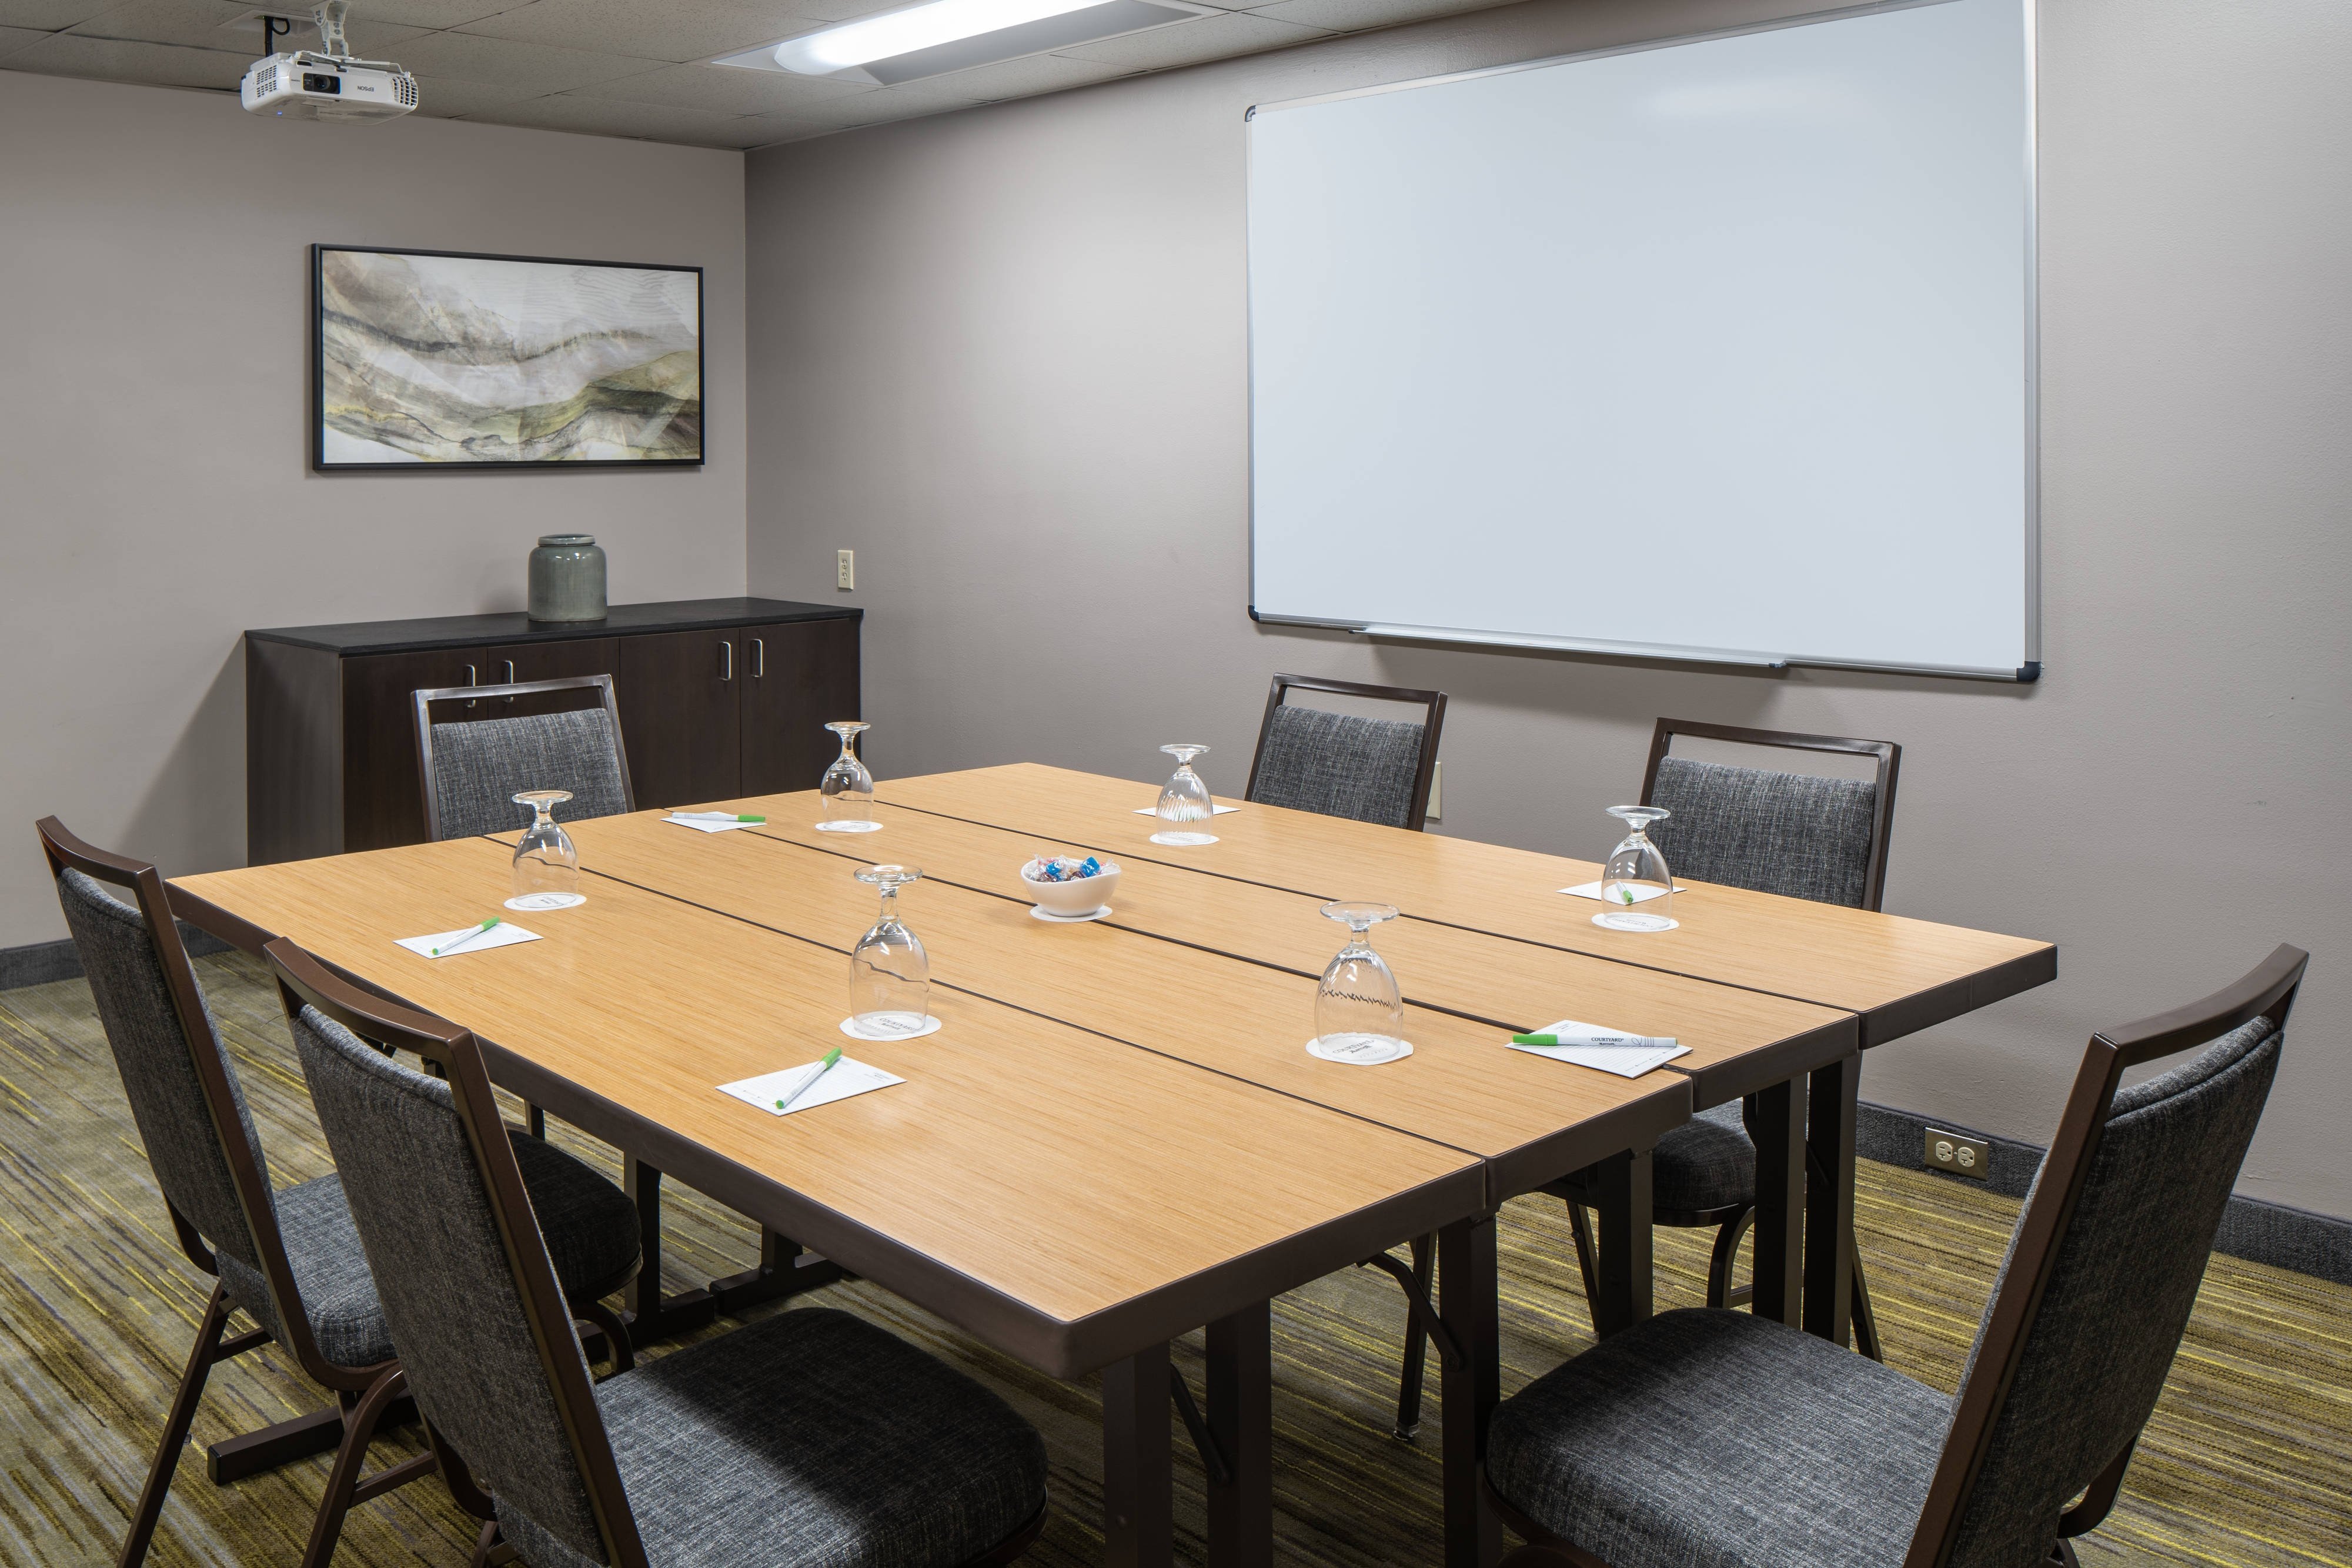 Meeting Room D - Boardroom Setup